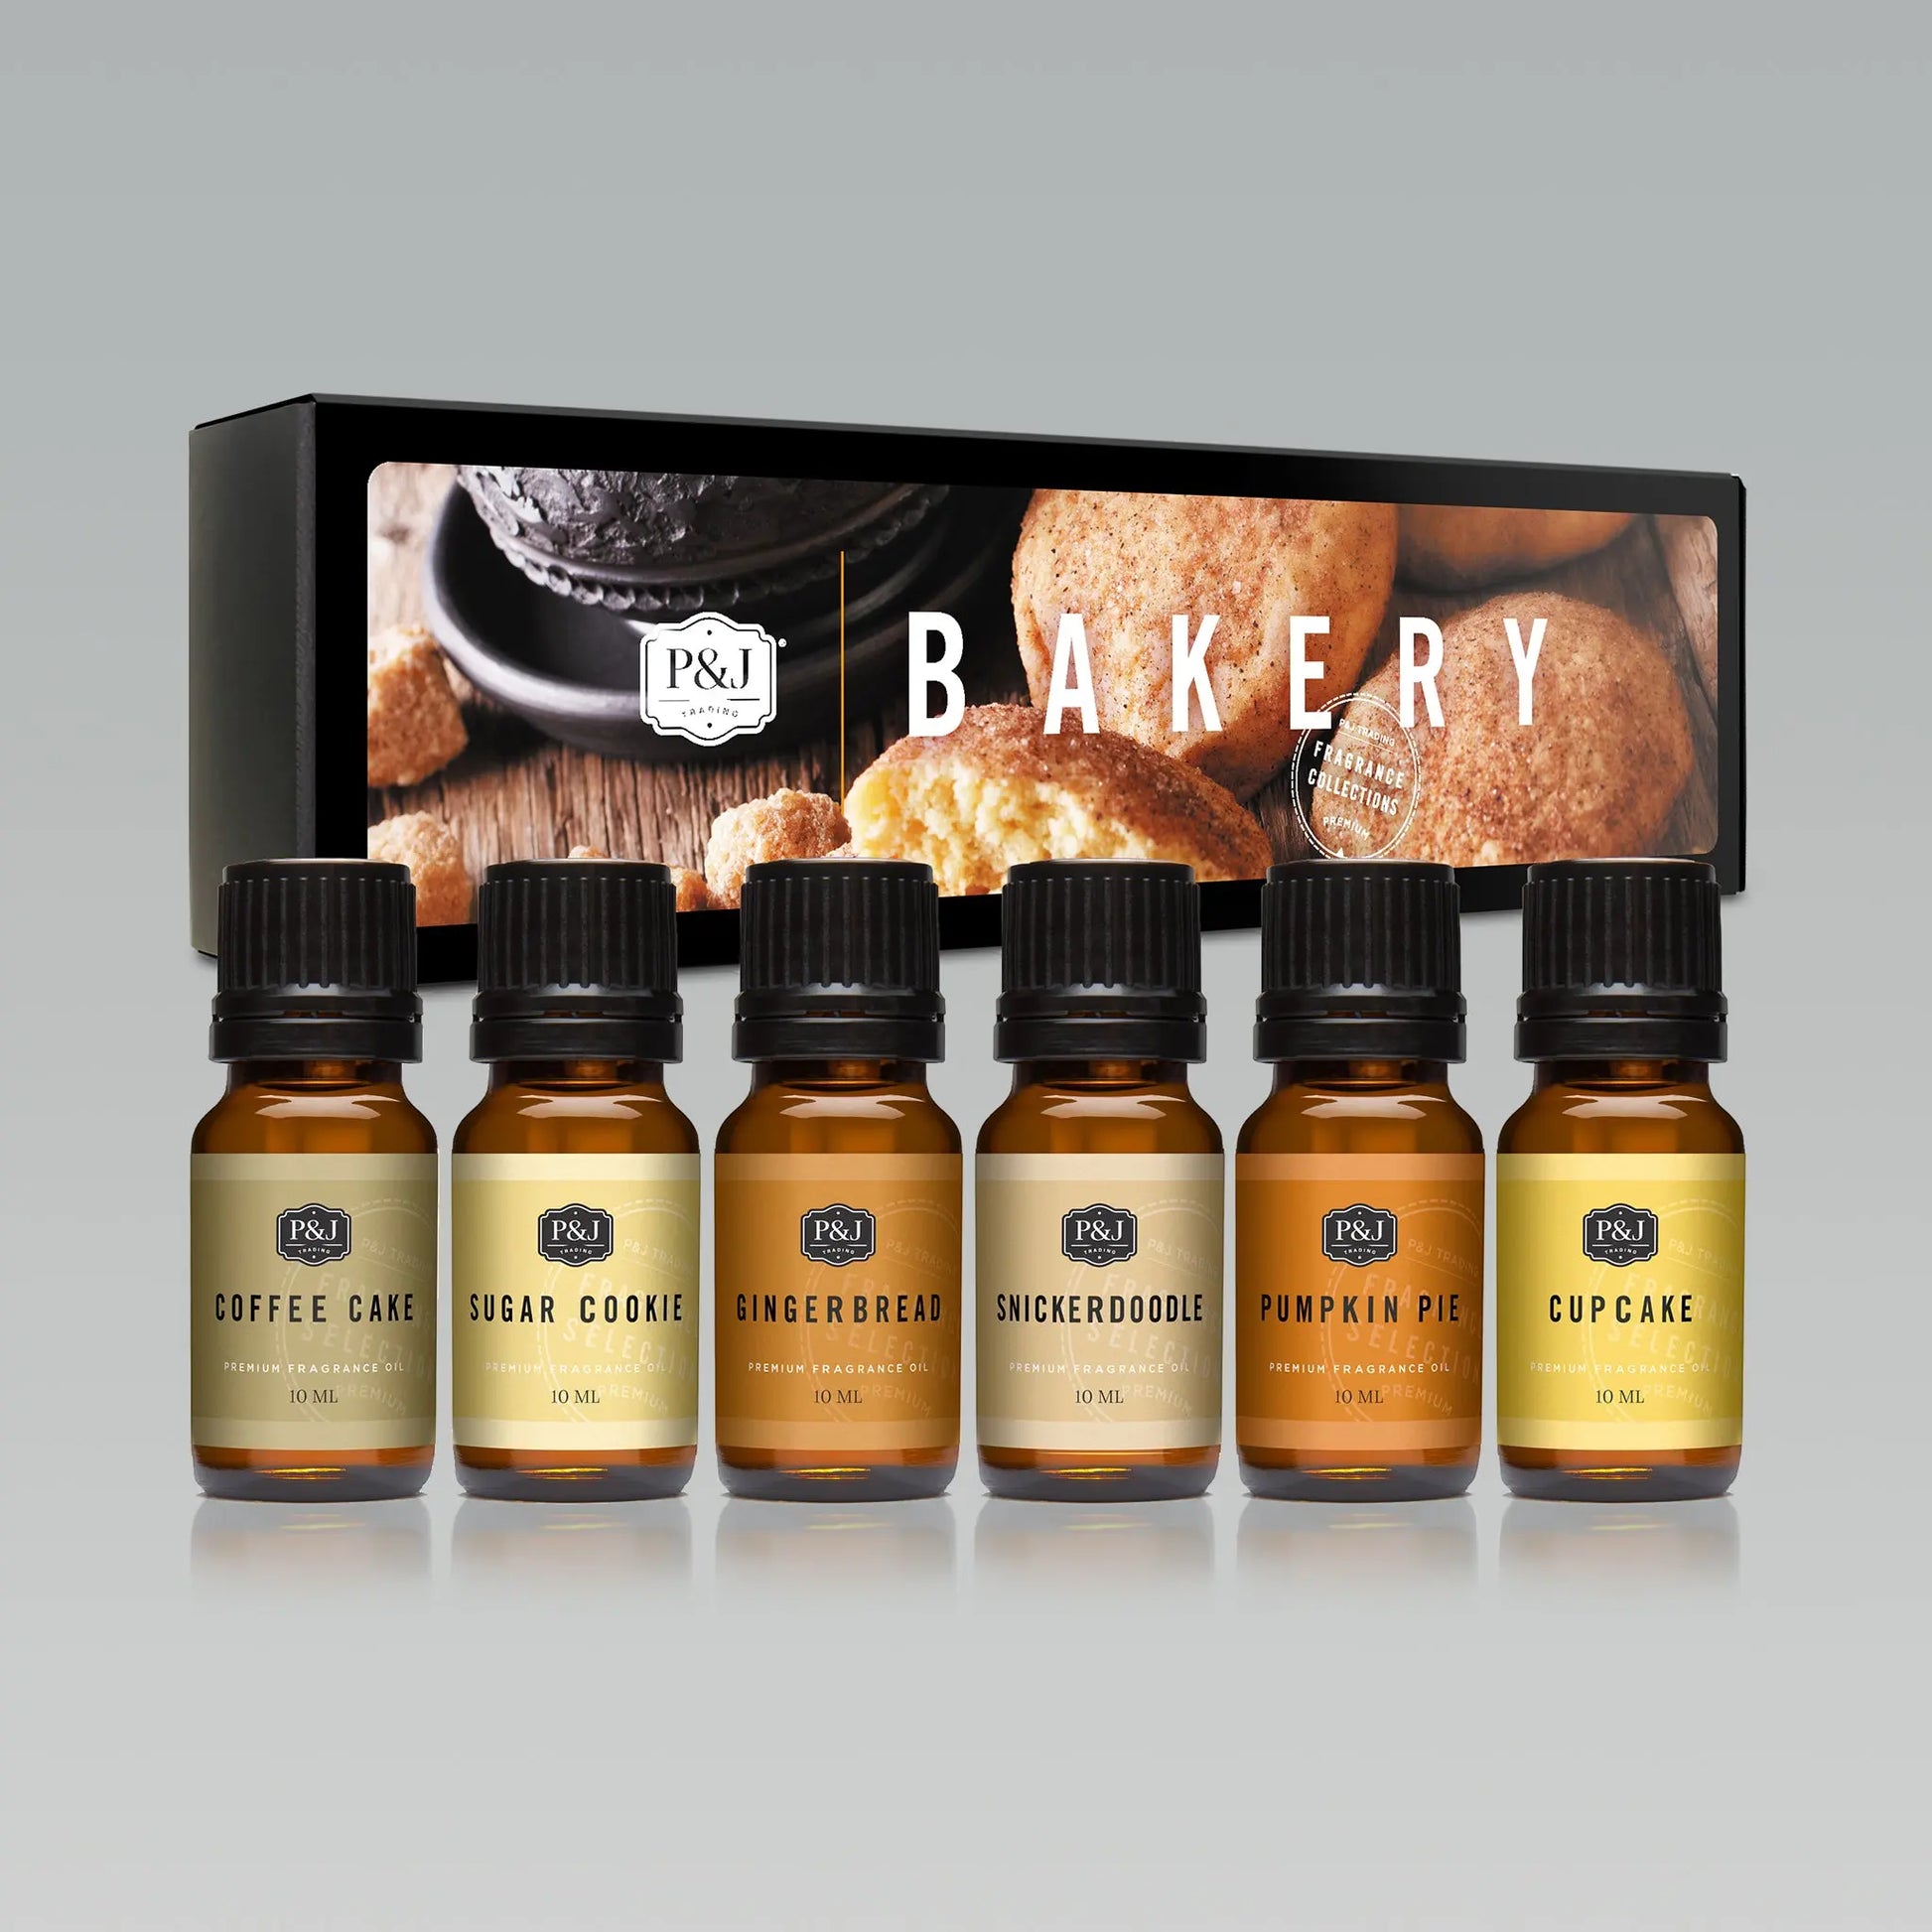  P&J Bakery Set Bundle - 6 Premium Grade Fragrance Oils